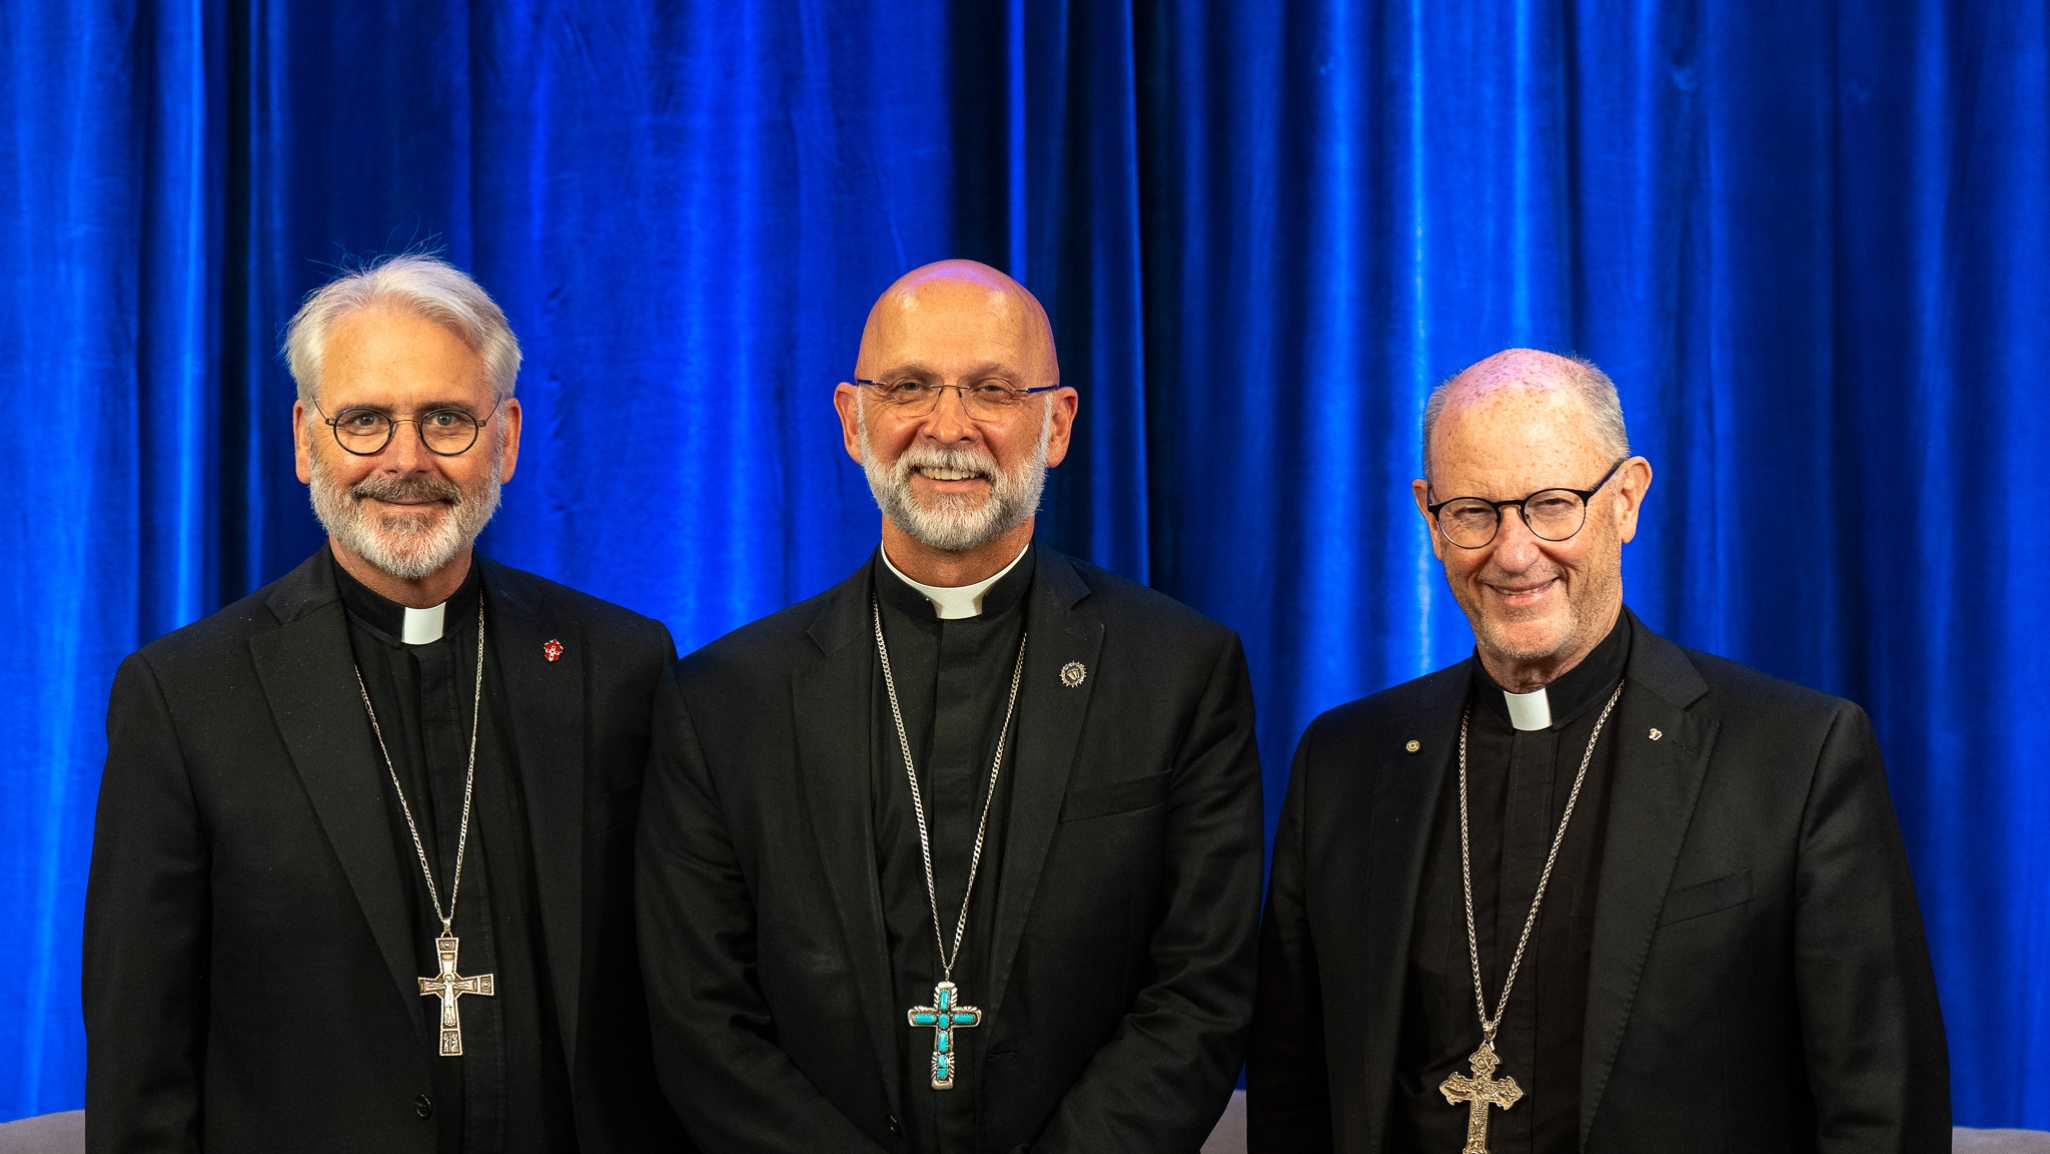 5 Minutes with a Bishop: The Camino with Archbishop Coakley, Bishop Wall, and Bishop Conley